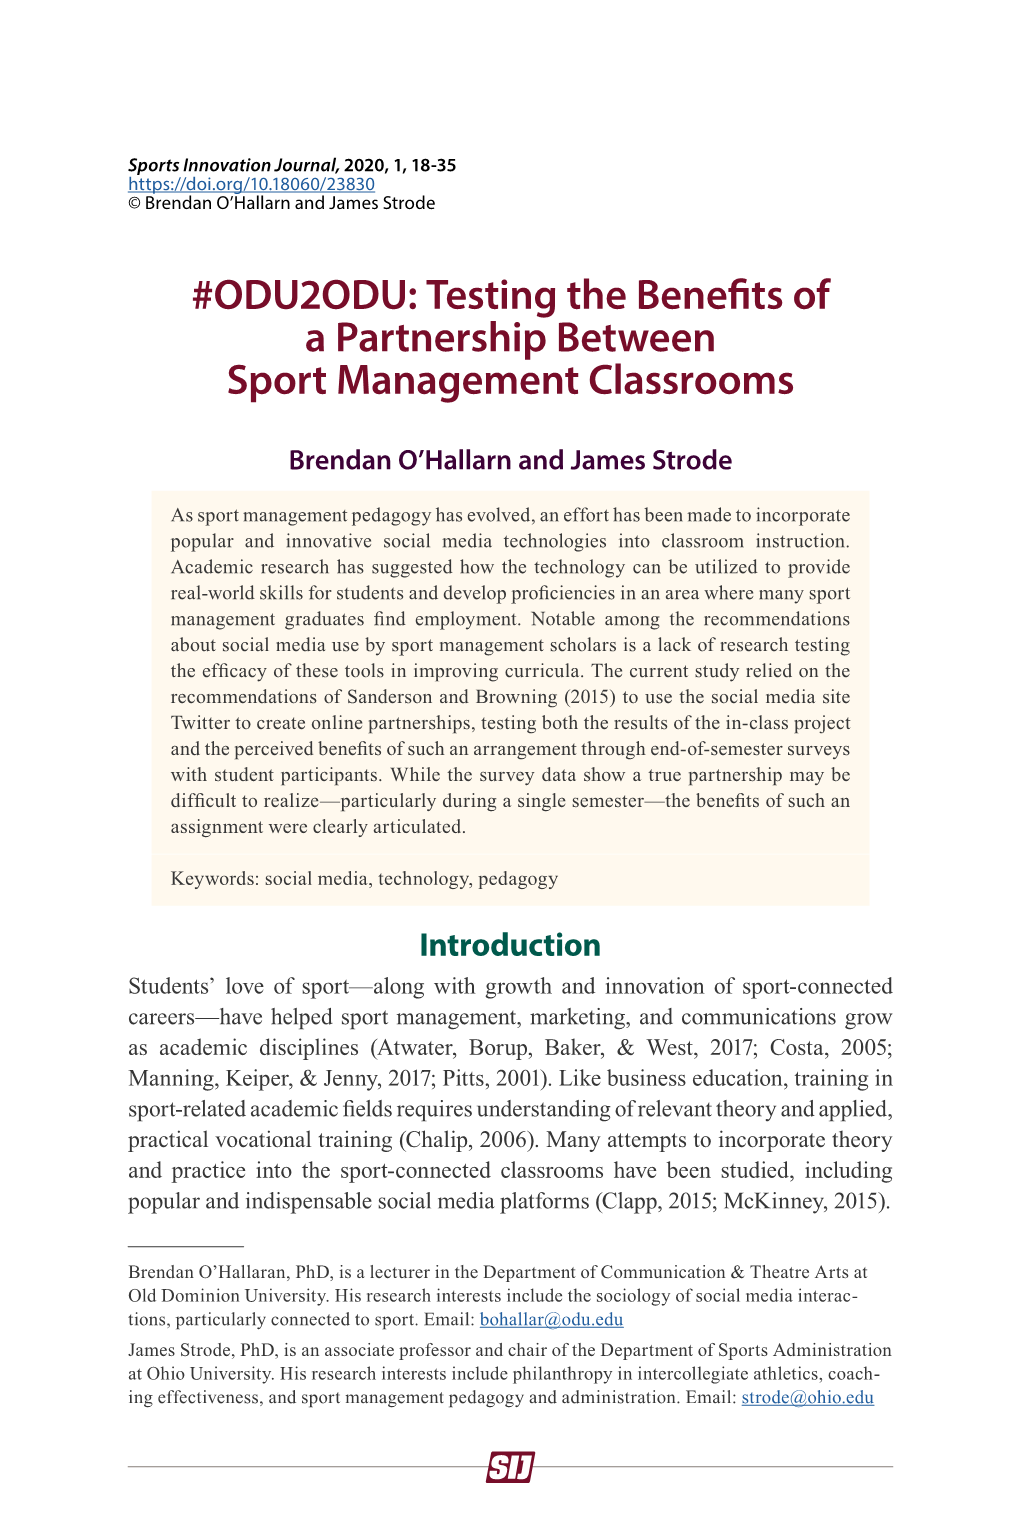 ODU2ODU: Testing the Benefits of a Partnership Between Sport Management Classrooms